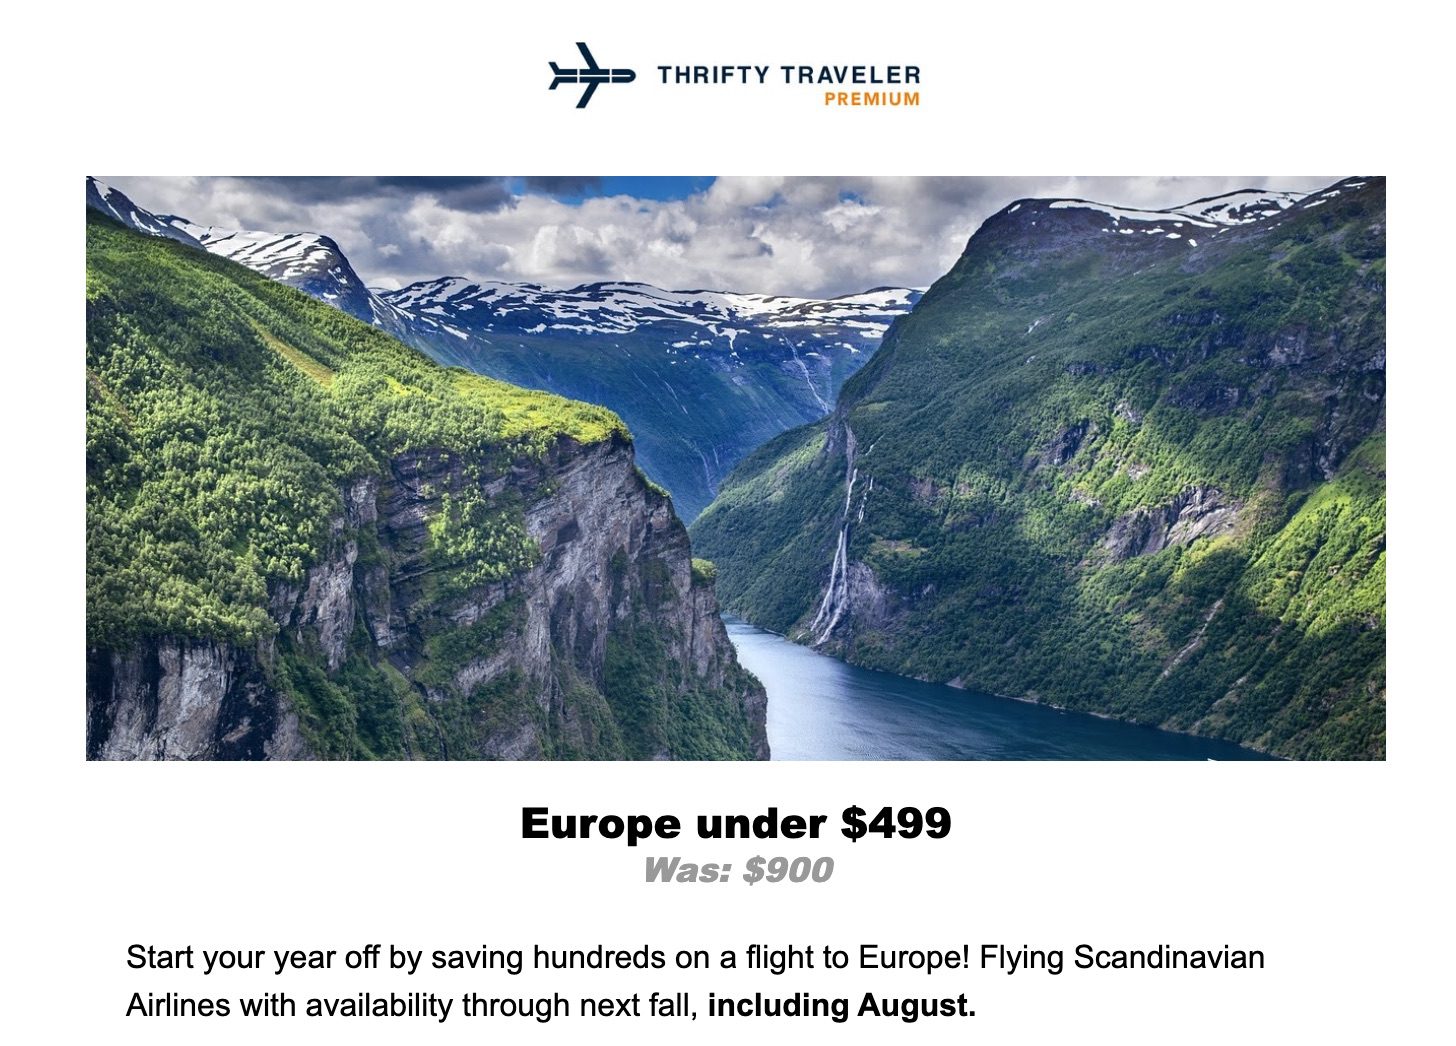 SAS Europe Thrifty Traveler Premium